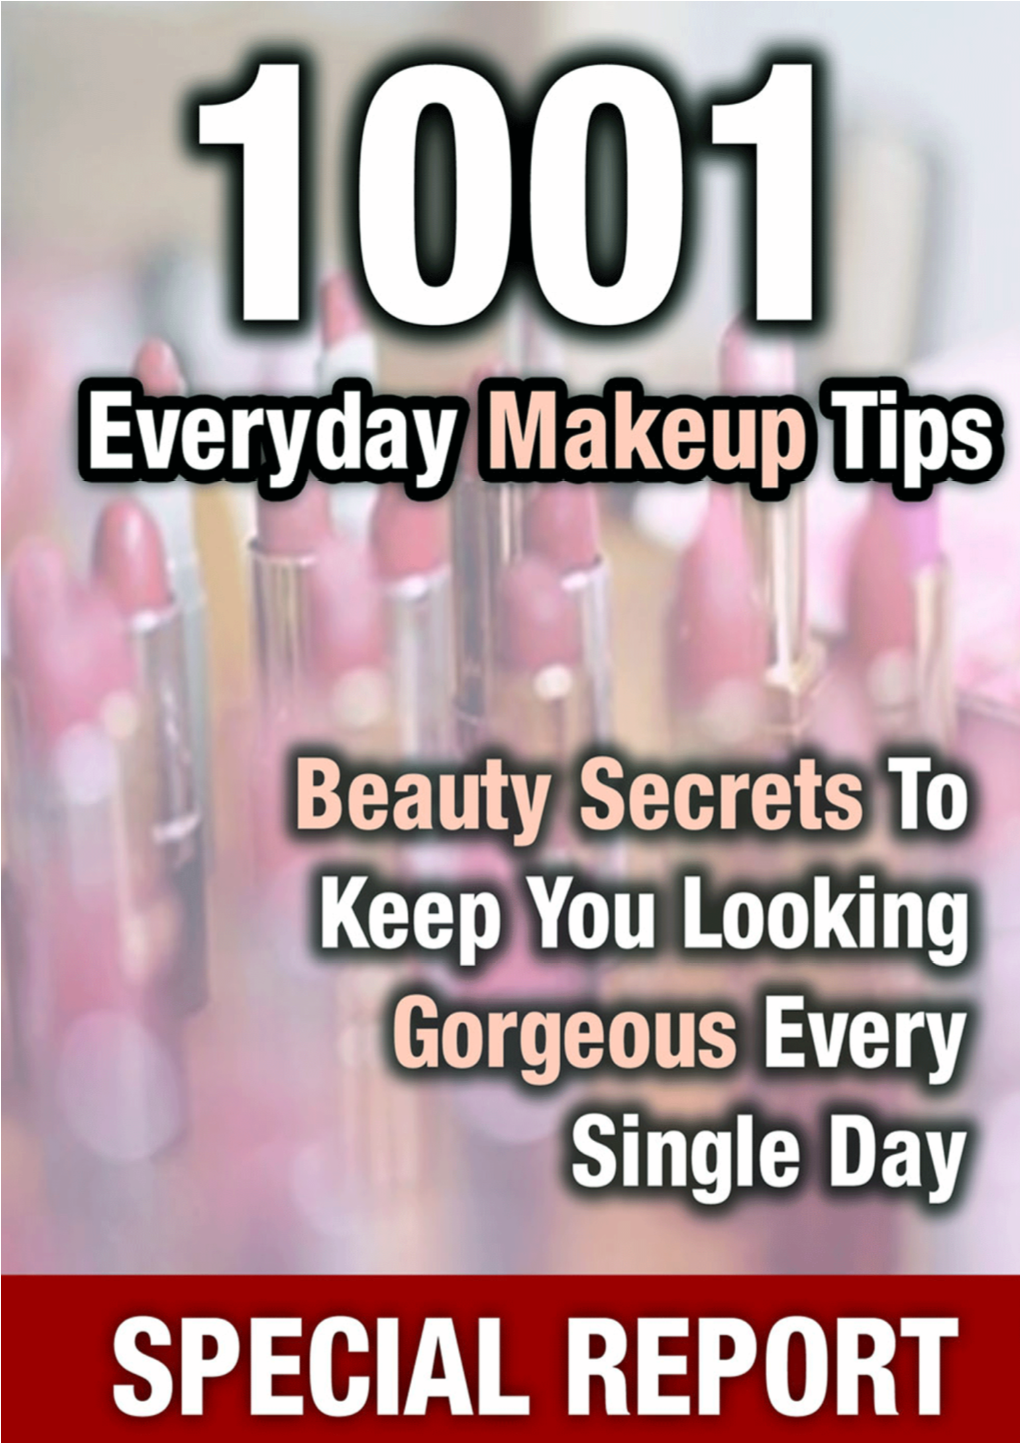 1001 Everyday Makeup Tips?